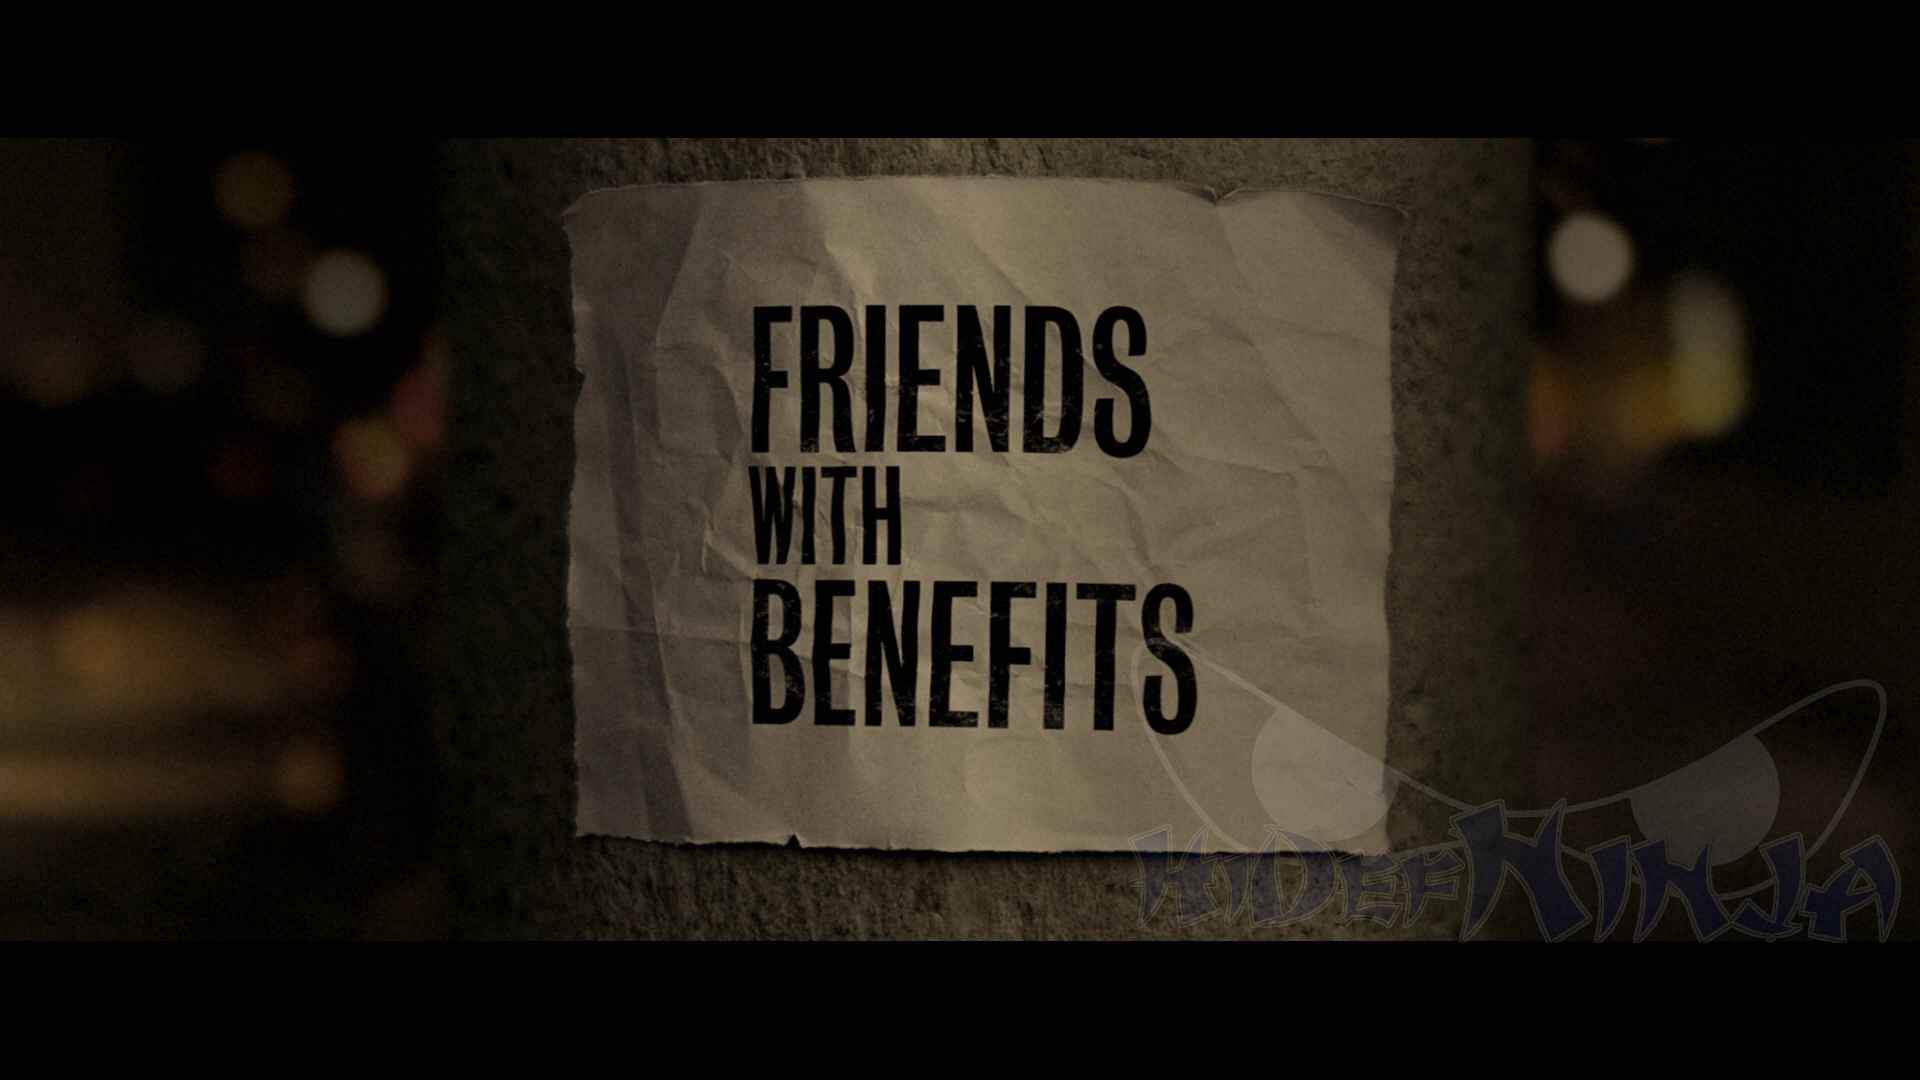 YESASIA: Friends with Benefits (2011) (Blu-ray) (Hong Kong Version) Blu-ray  - Justin Timberlake, Mila Kunis, Intercontinental Video (HK) - Western /  World Movies & Videos - Free Shipping - North America Site